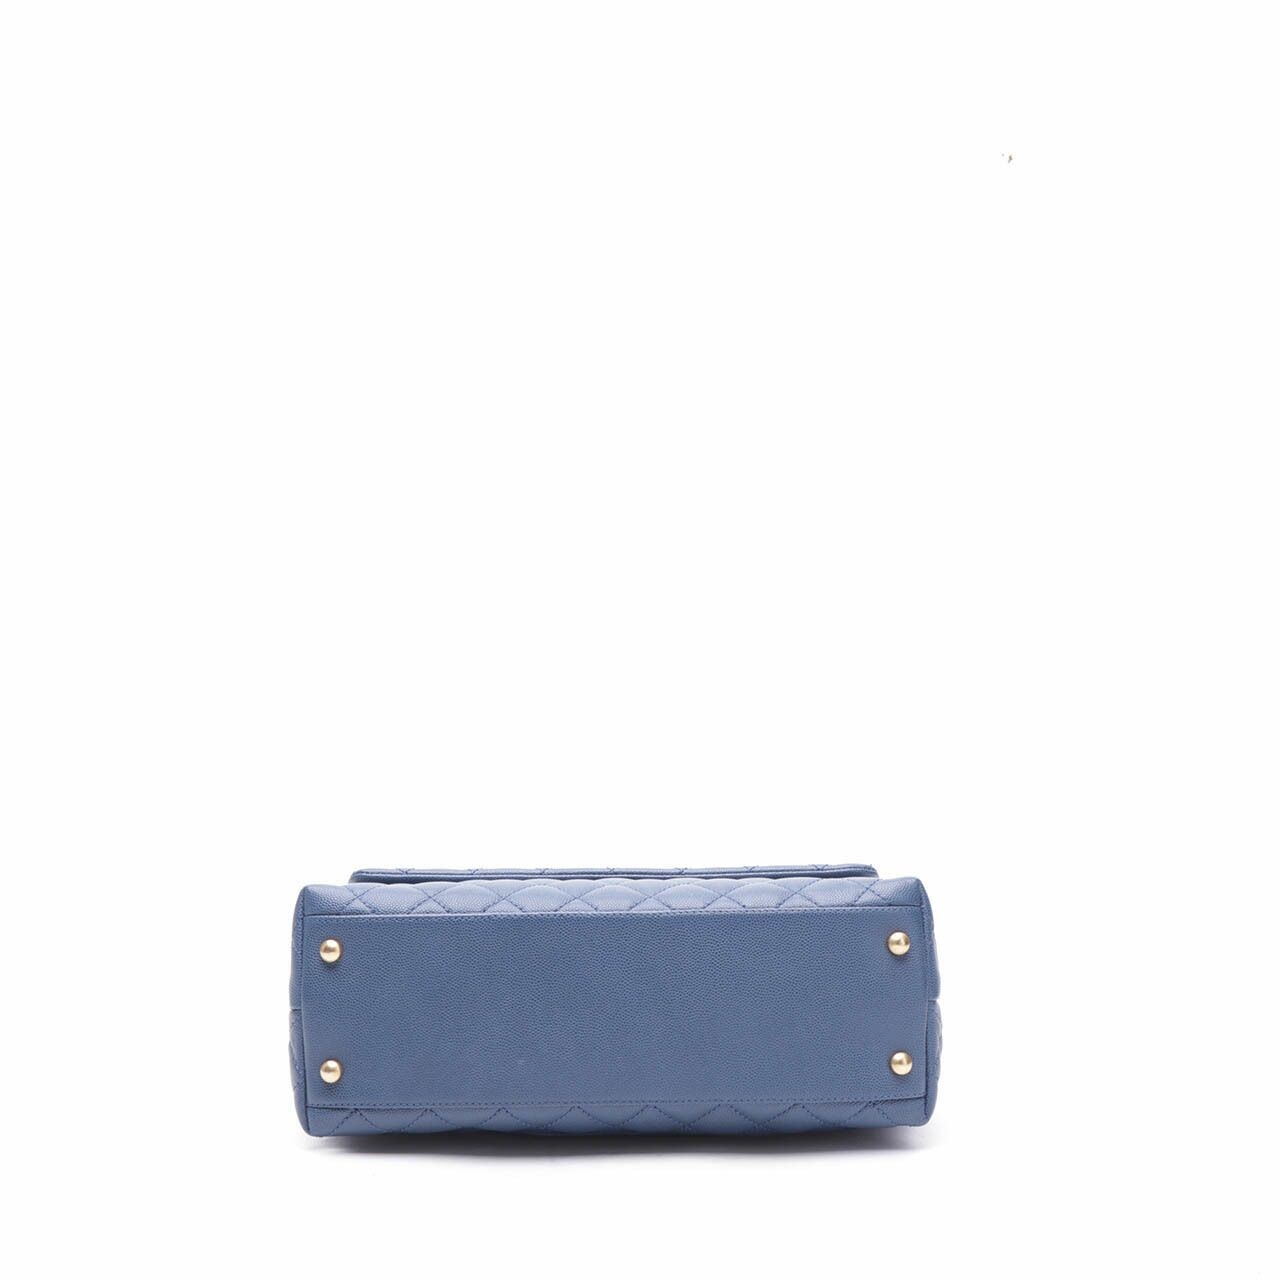 Chanel Coco Caviar Leather Blue Top Handle Satchel Bag